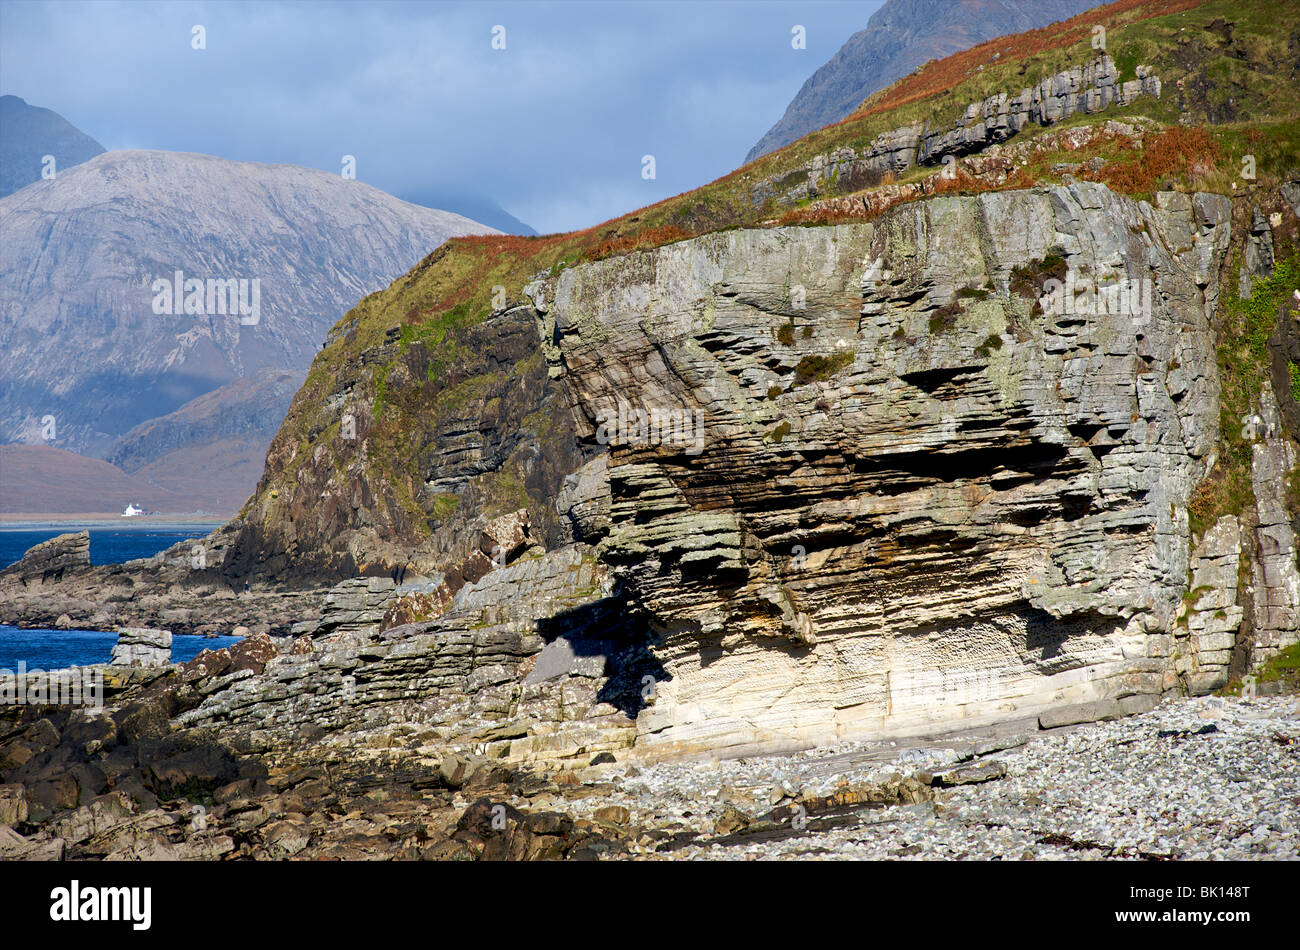 Scotland, Skye island, Elgol, the Cuillins mountains Stock Photo